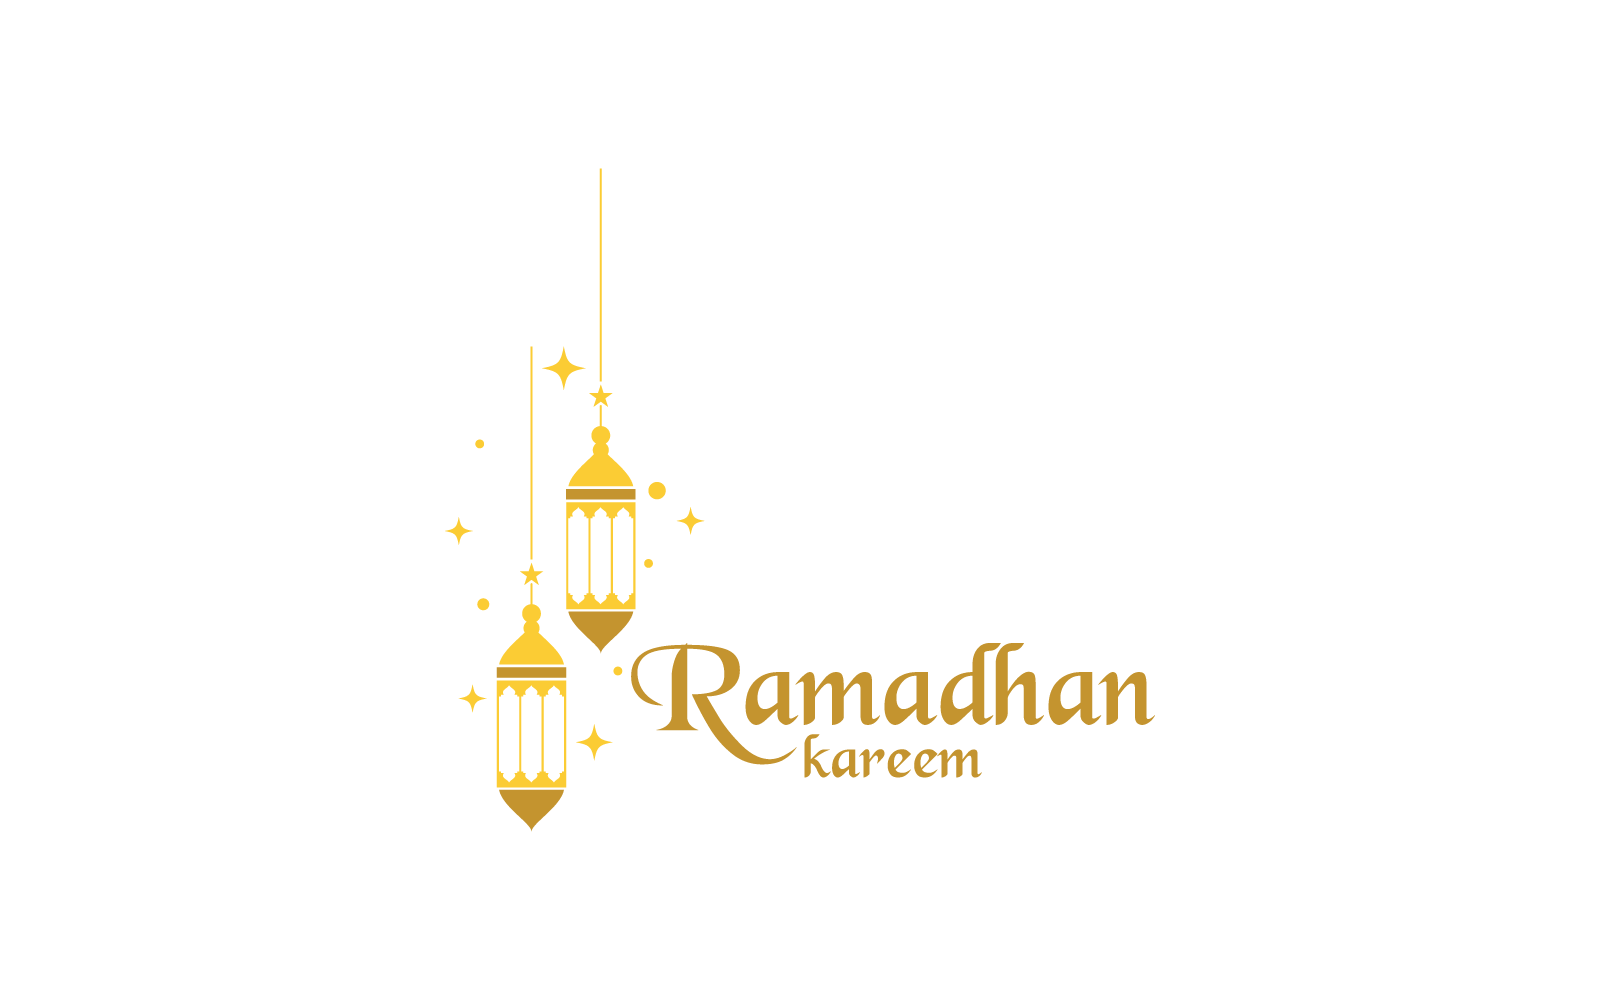 Modèle vectoriel d'icône de logo Ramadhan kareem